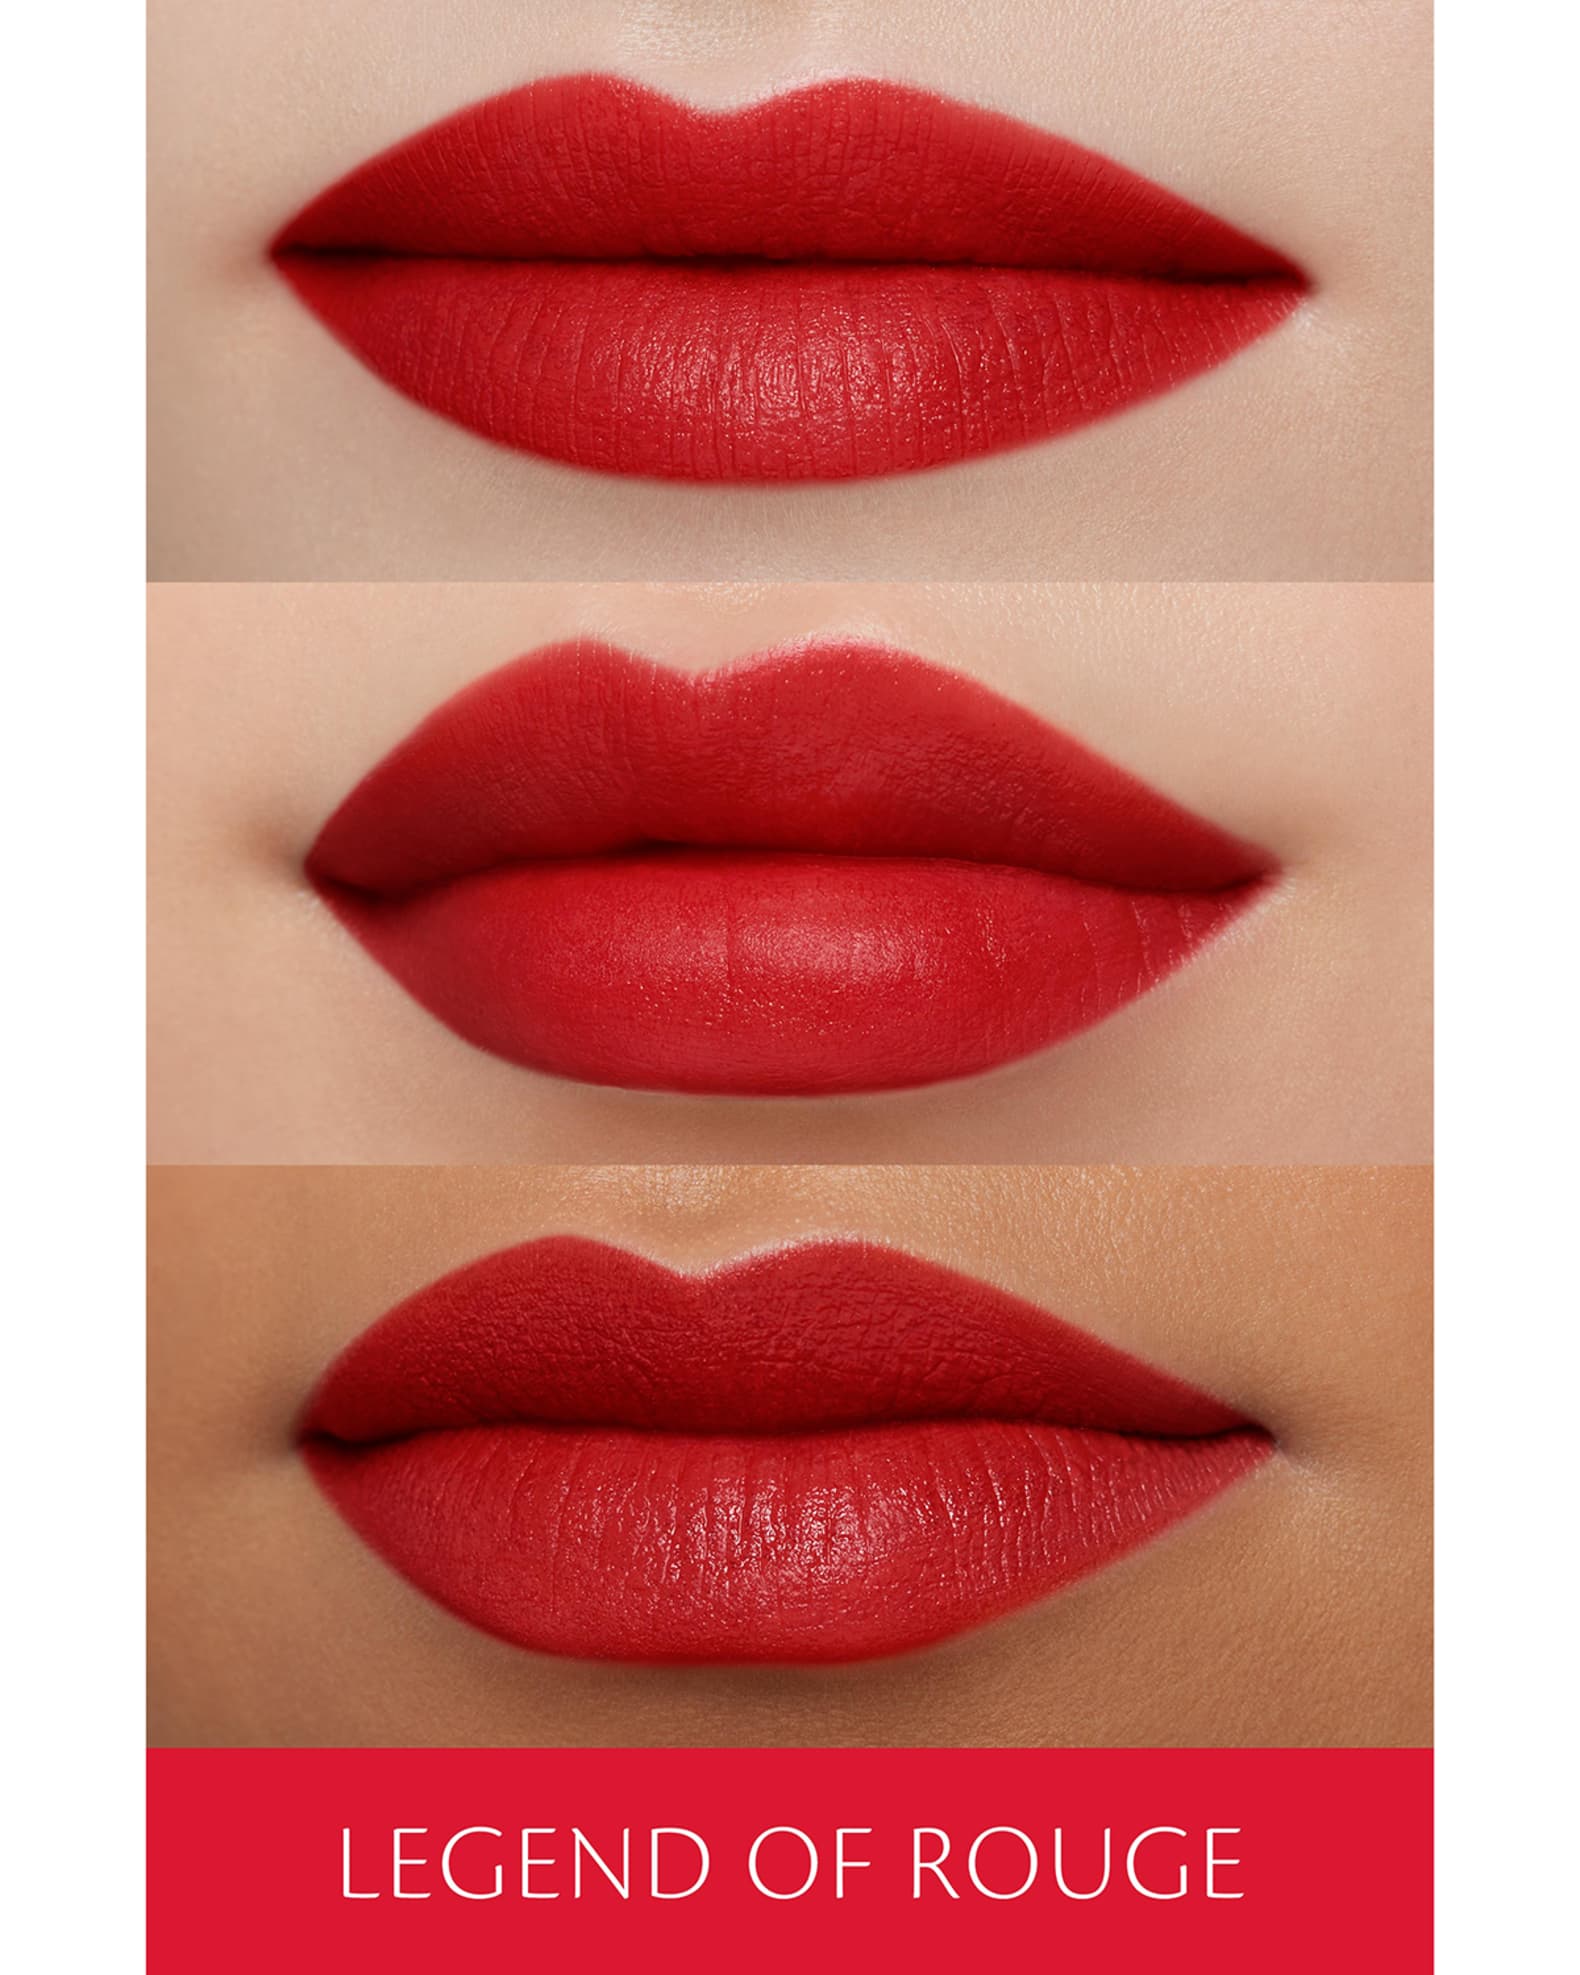 Rouge Louboutin Matte Fluids - Matte liquid lipstick - Rouge